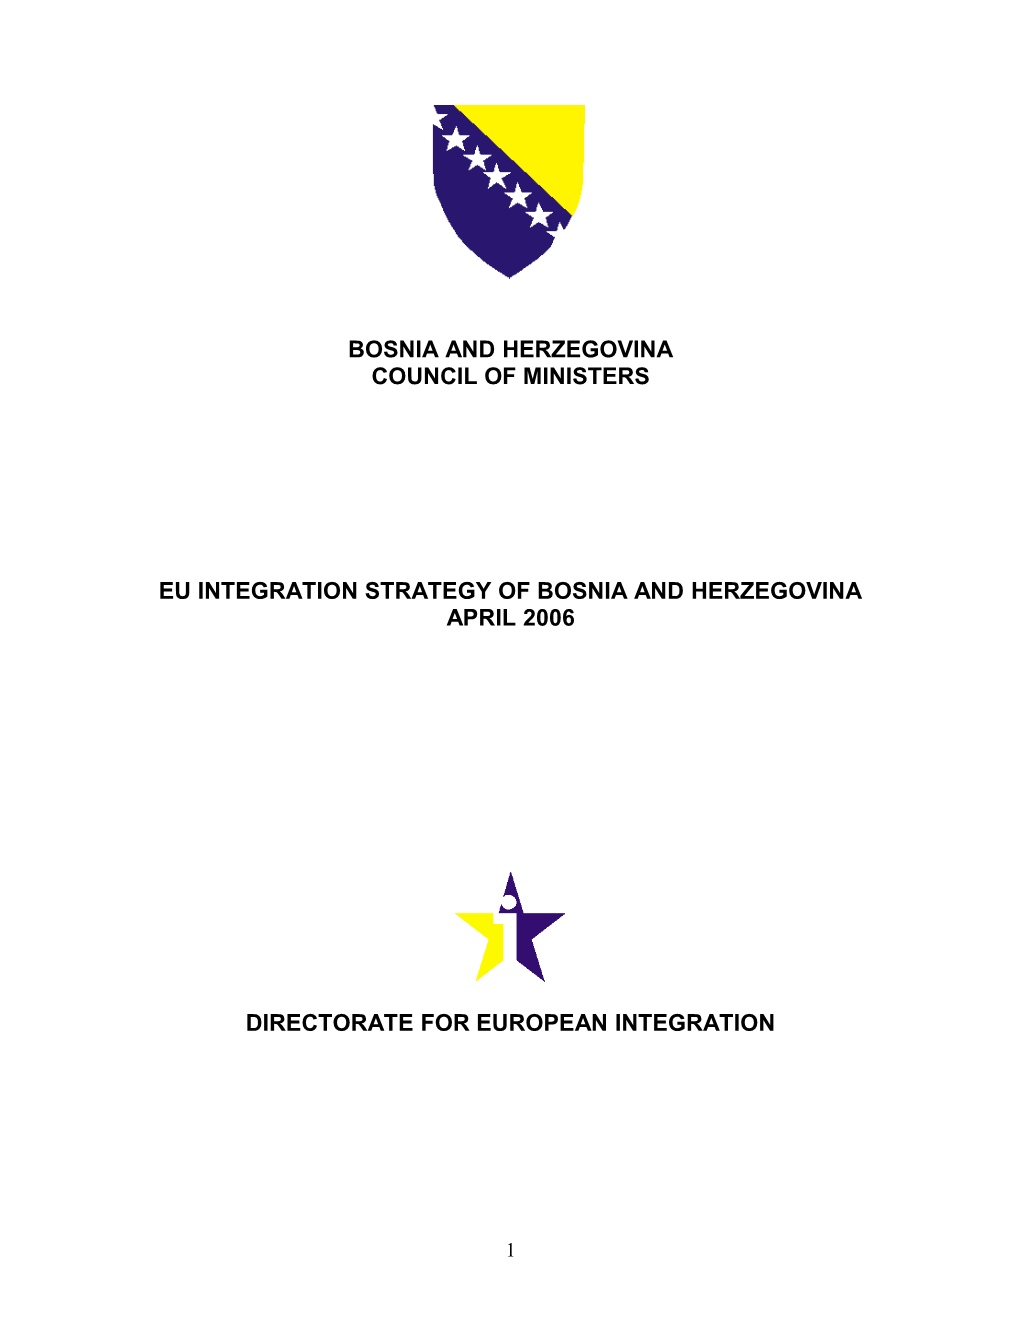 Eu Integration Strategy of Bosnia and Herzegovina